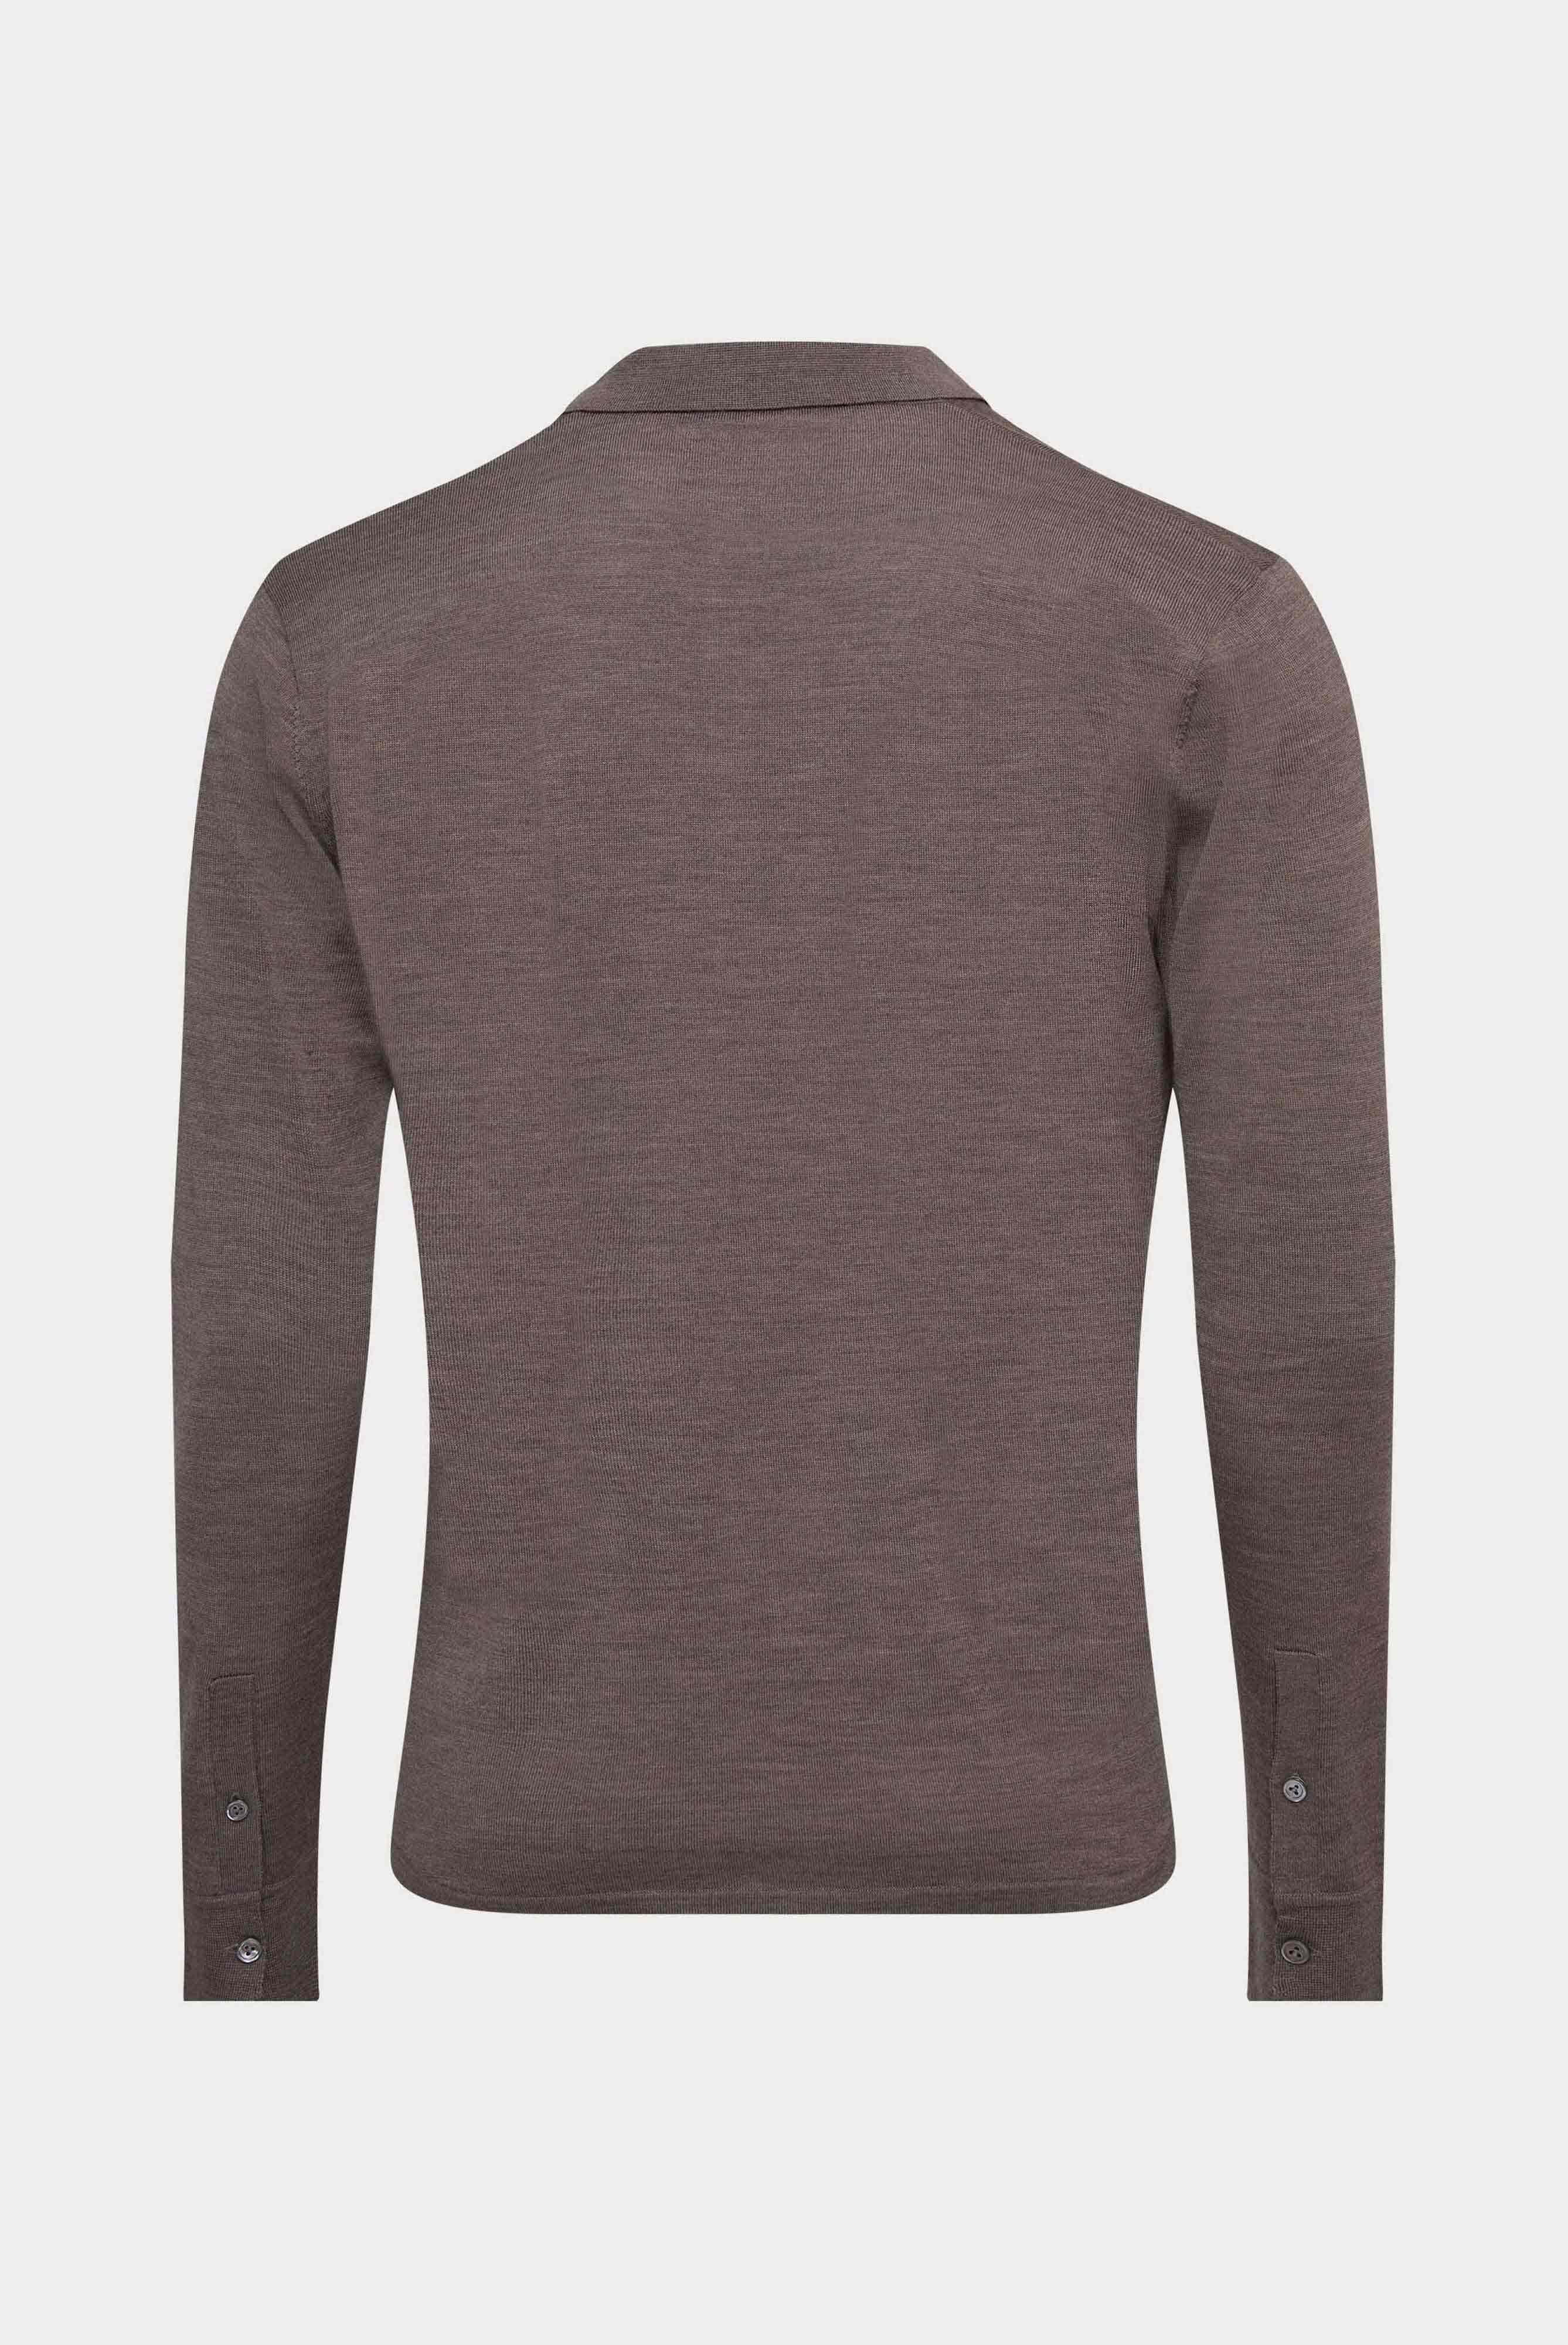 Easy Iron Shirts+Knit Shirt in Ultrafine Merino+82.8611..S00173.170.S